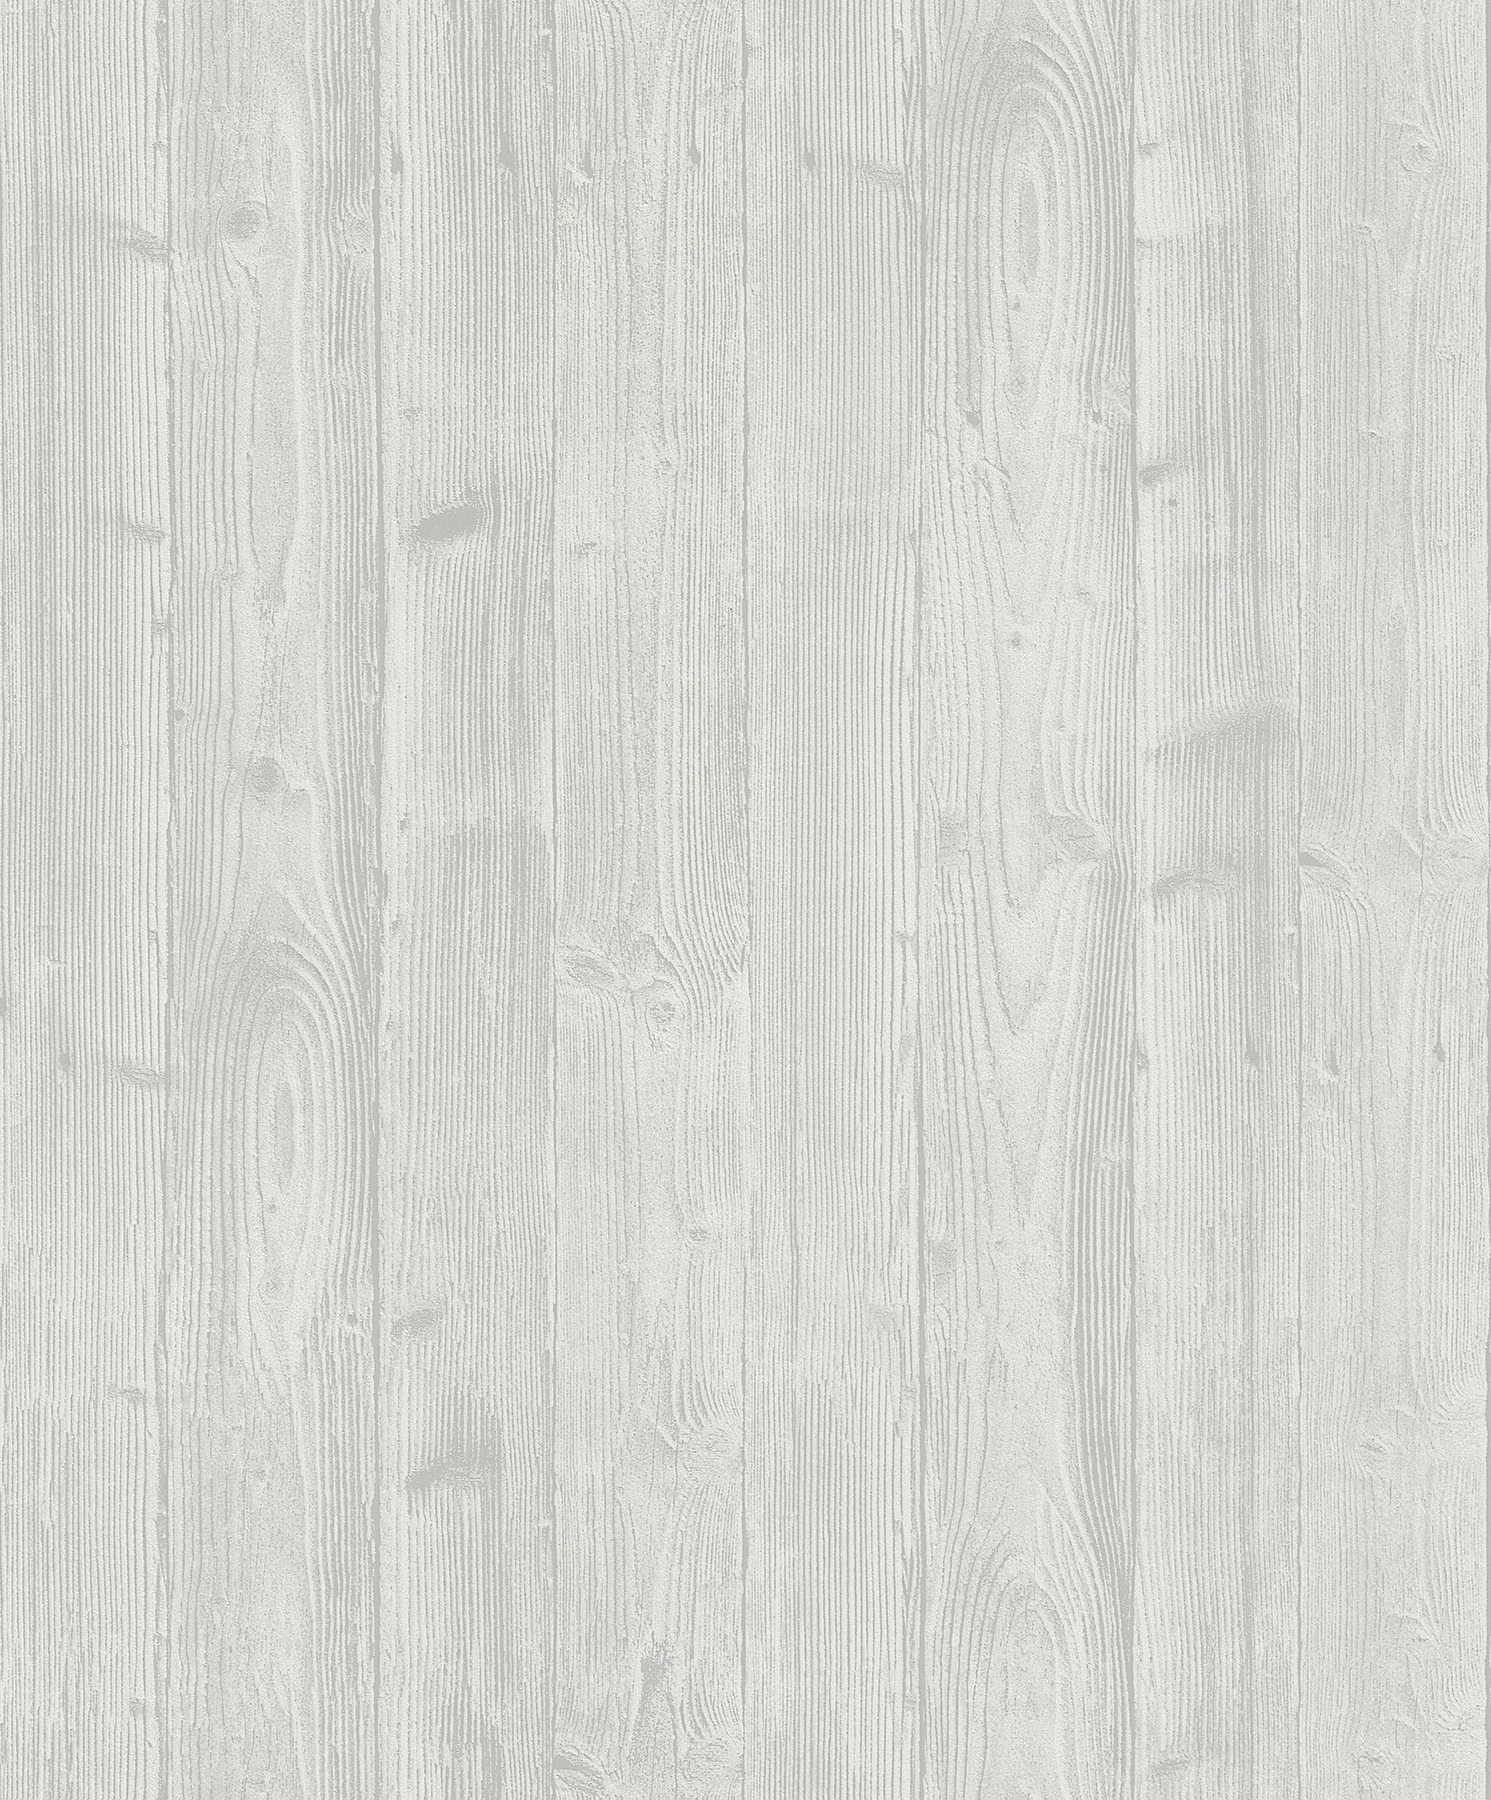 light gray wood background